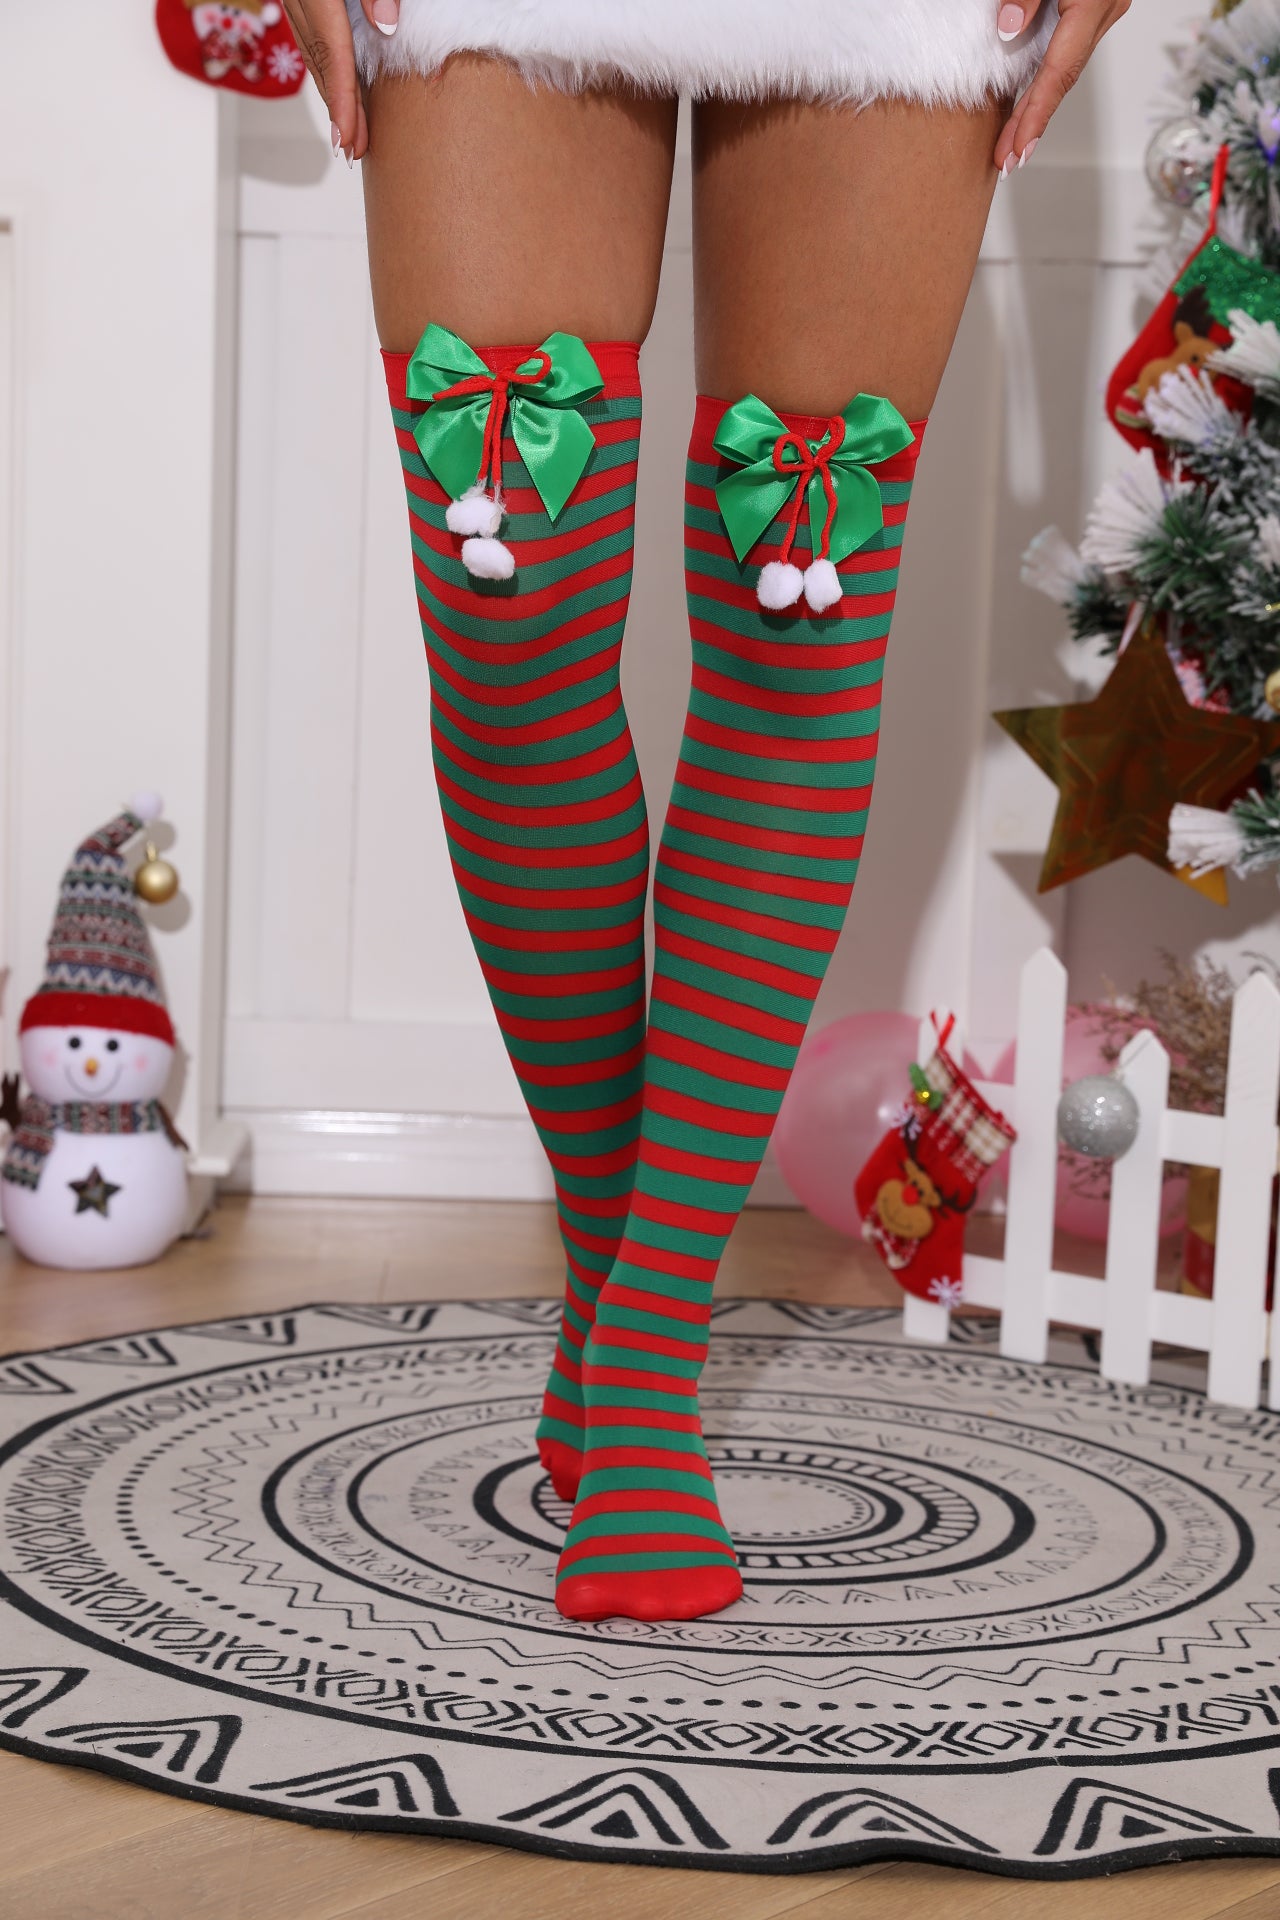 Lidogirls Christmas stocking: Christmas Cute Bow Striped Knee High Stockings